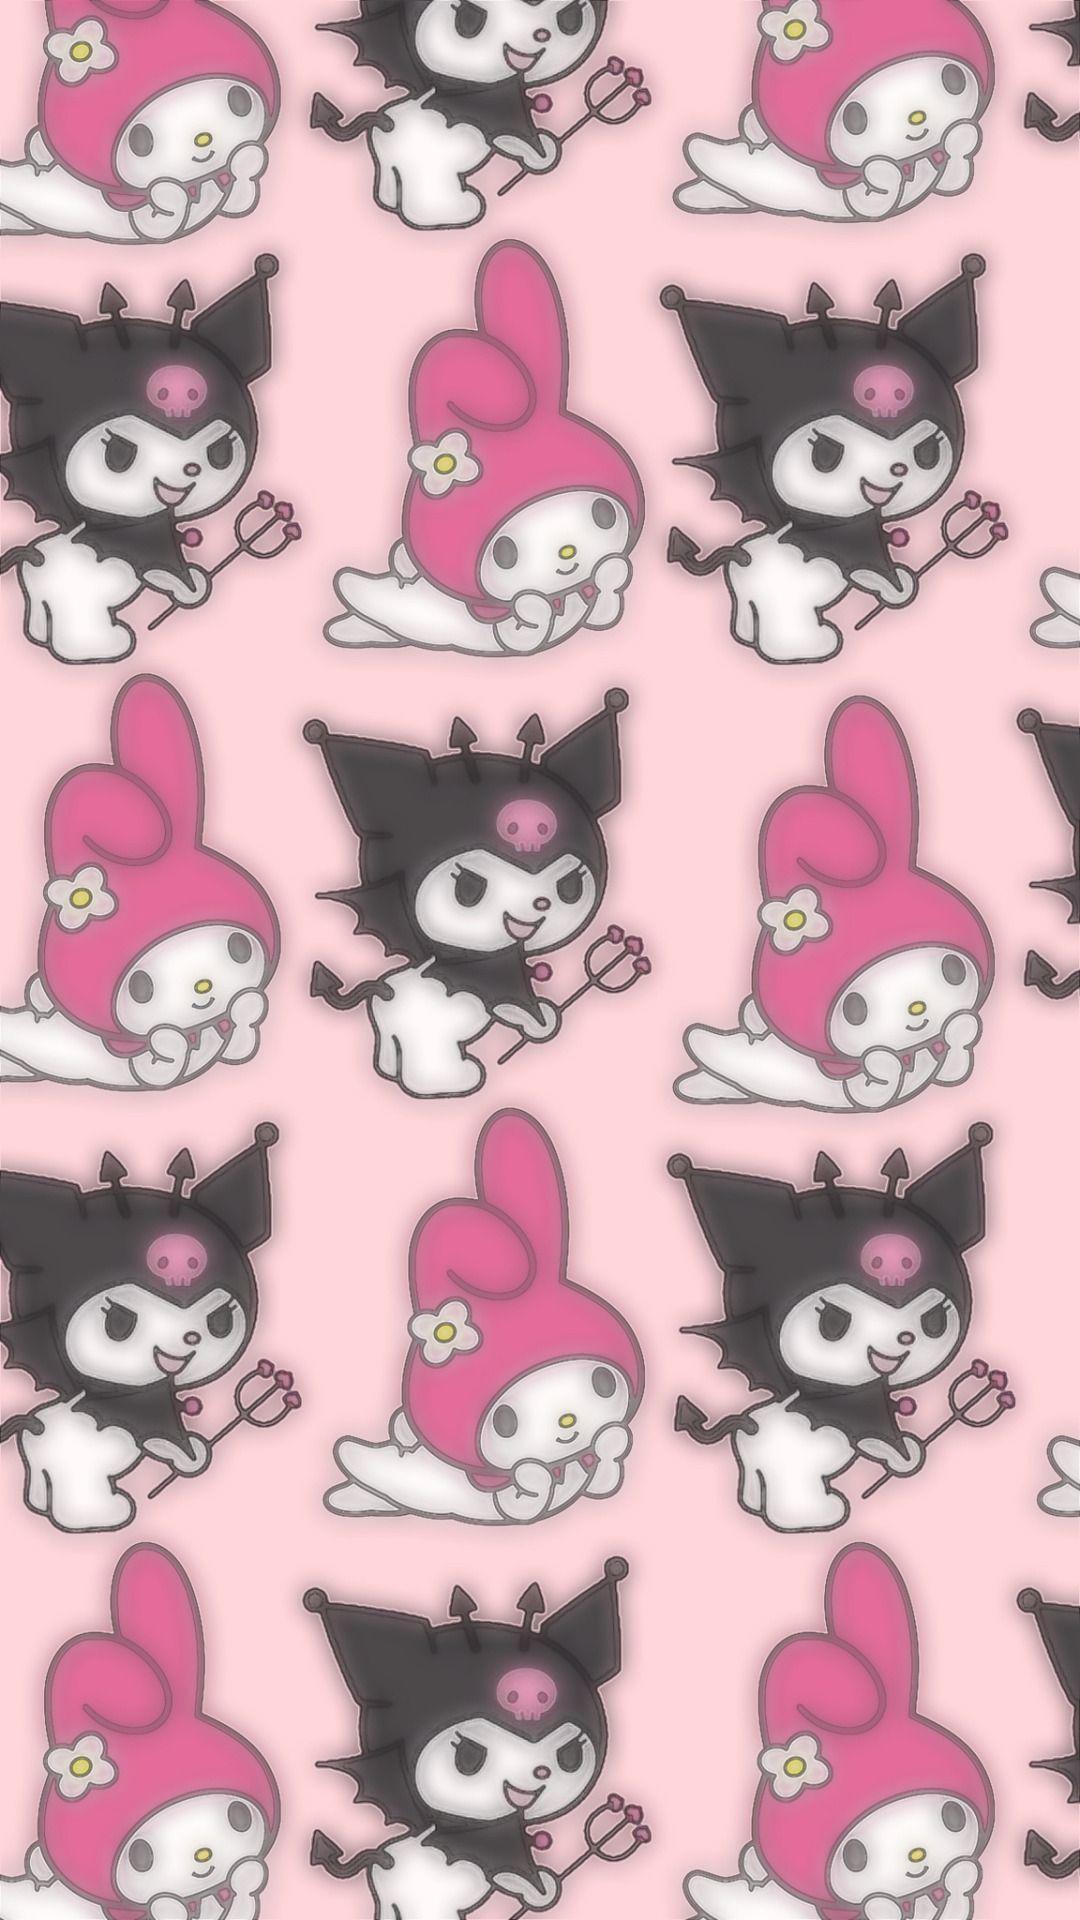 punk hello kitty backgrounds